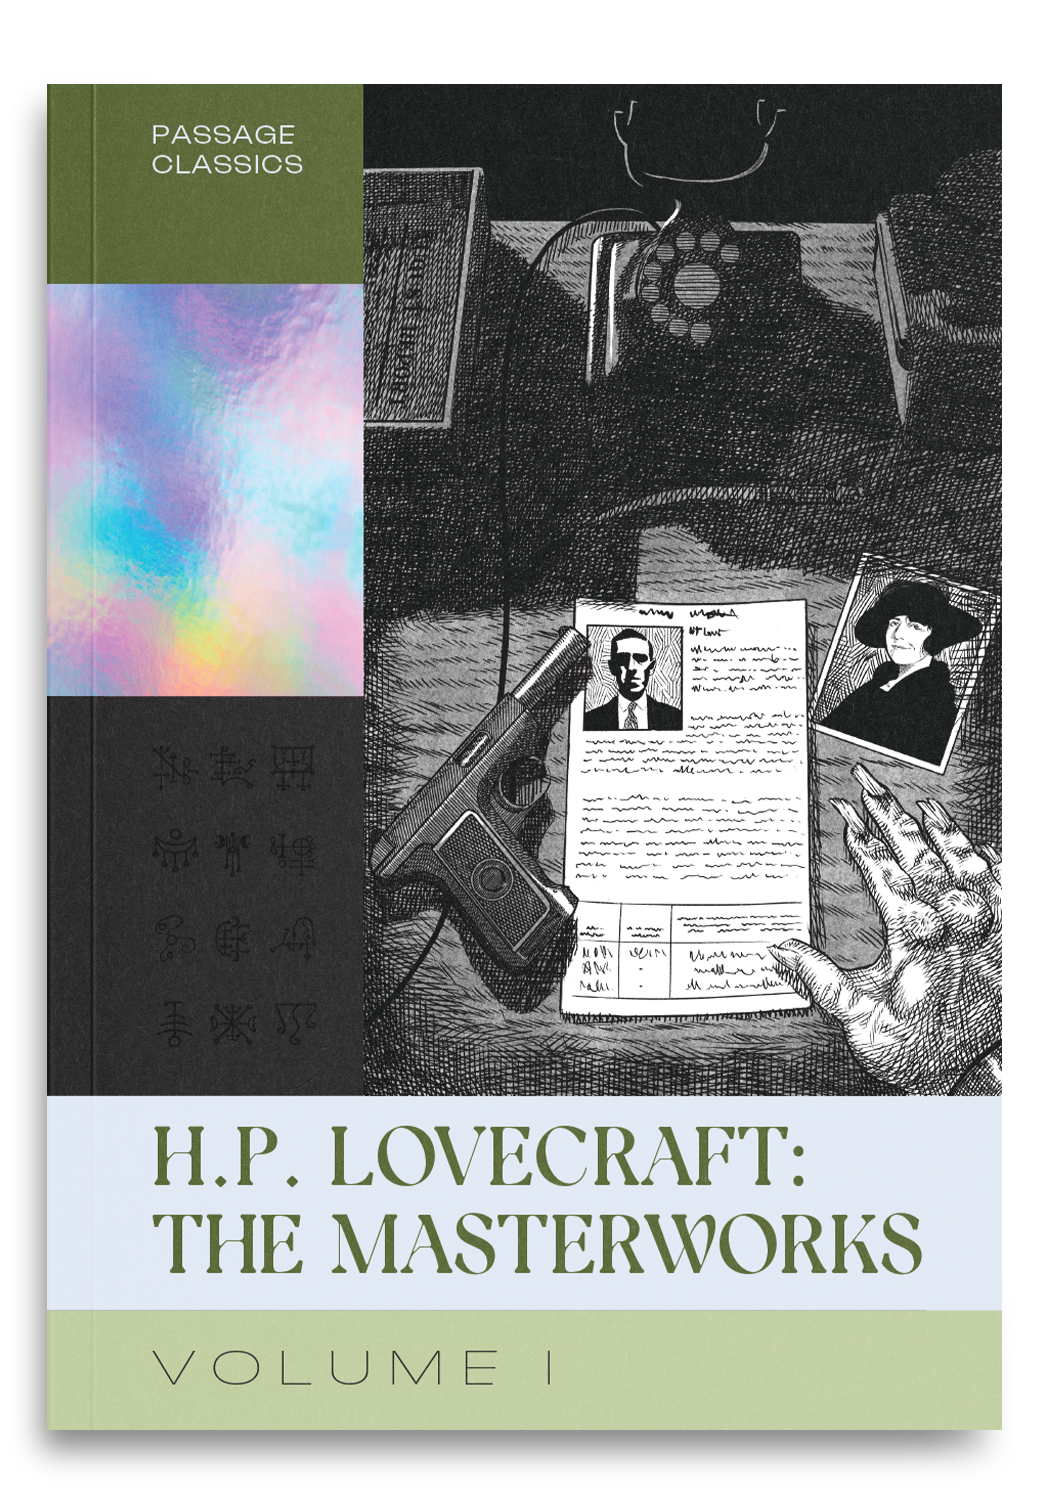 H.P. Lovecraft: The Masterworks, Volume I